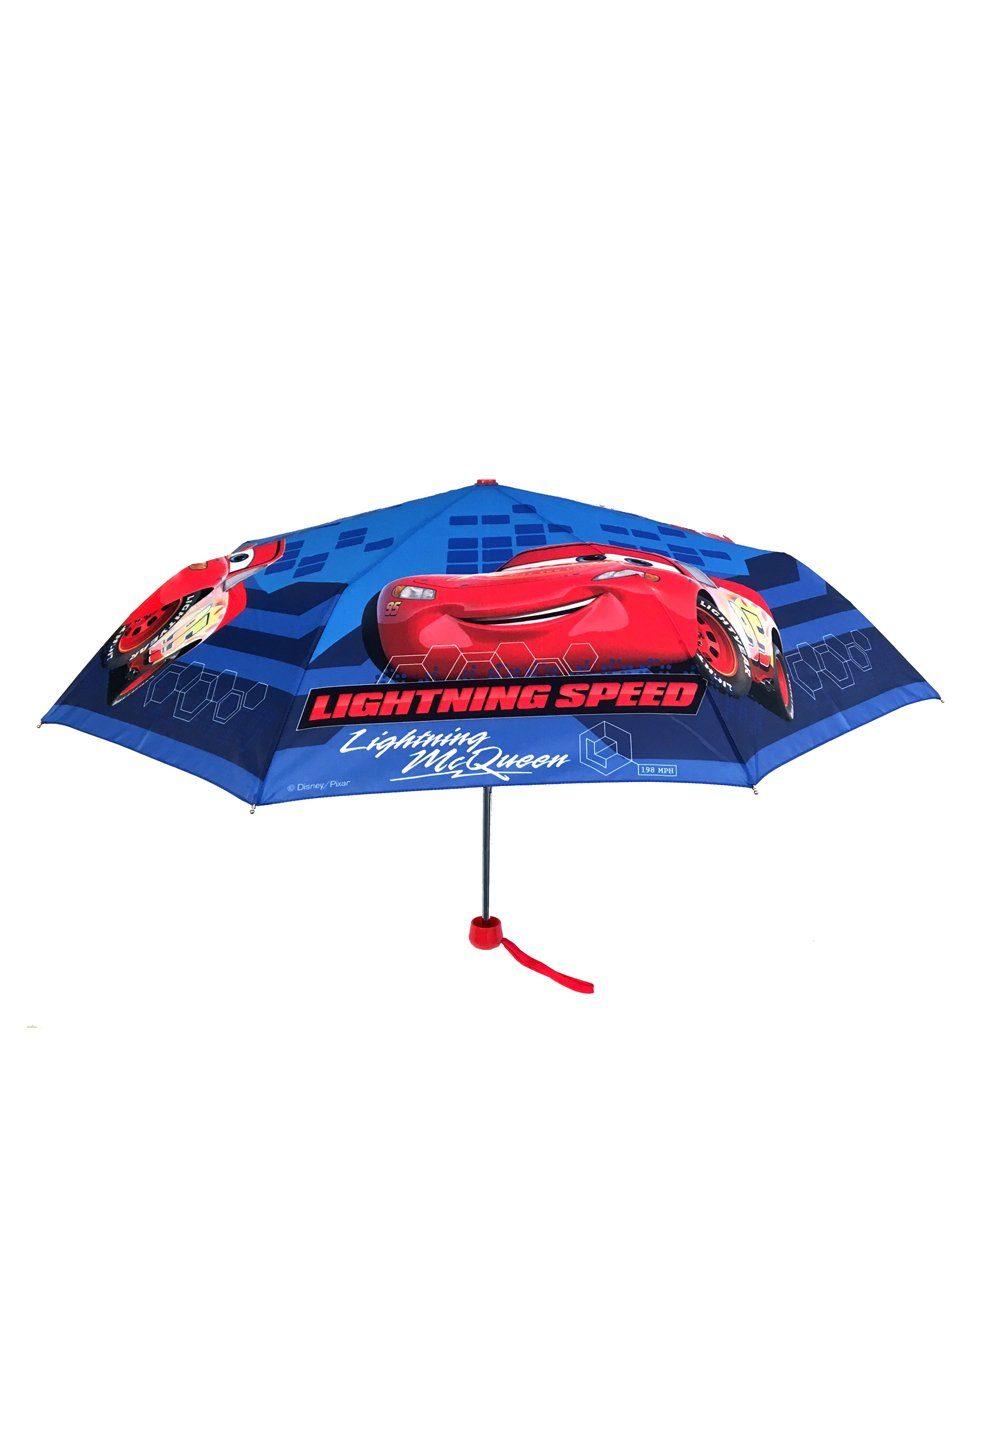 Disney Cars Taschenregenschirm Kinder Jungen Taschen-Regenschirm Klappschirm Knirps